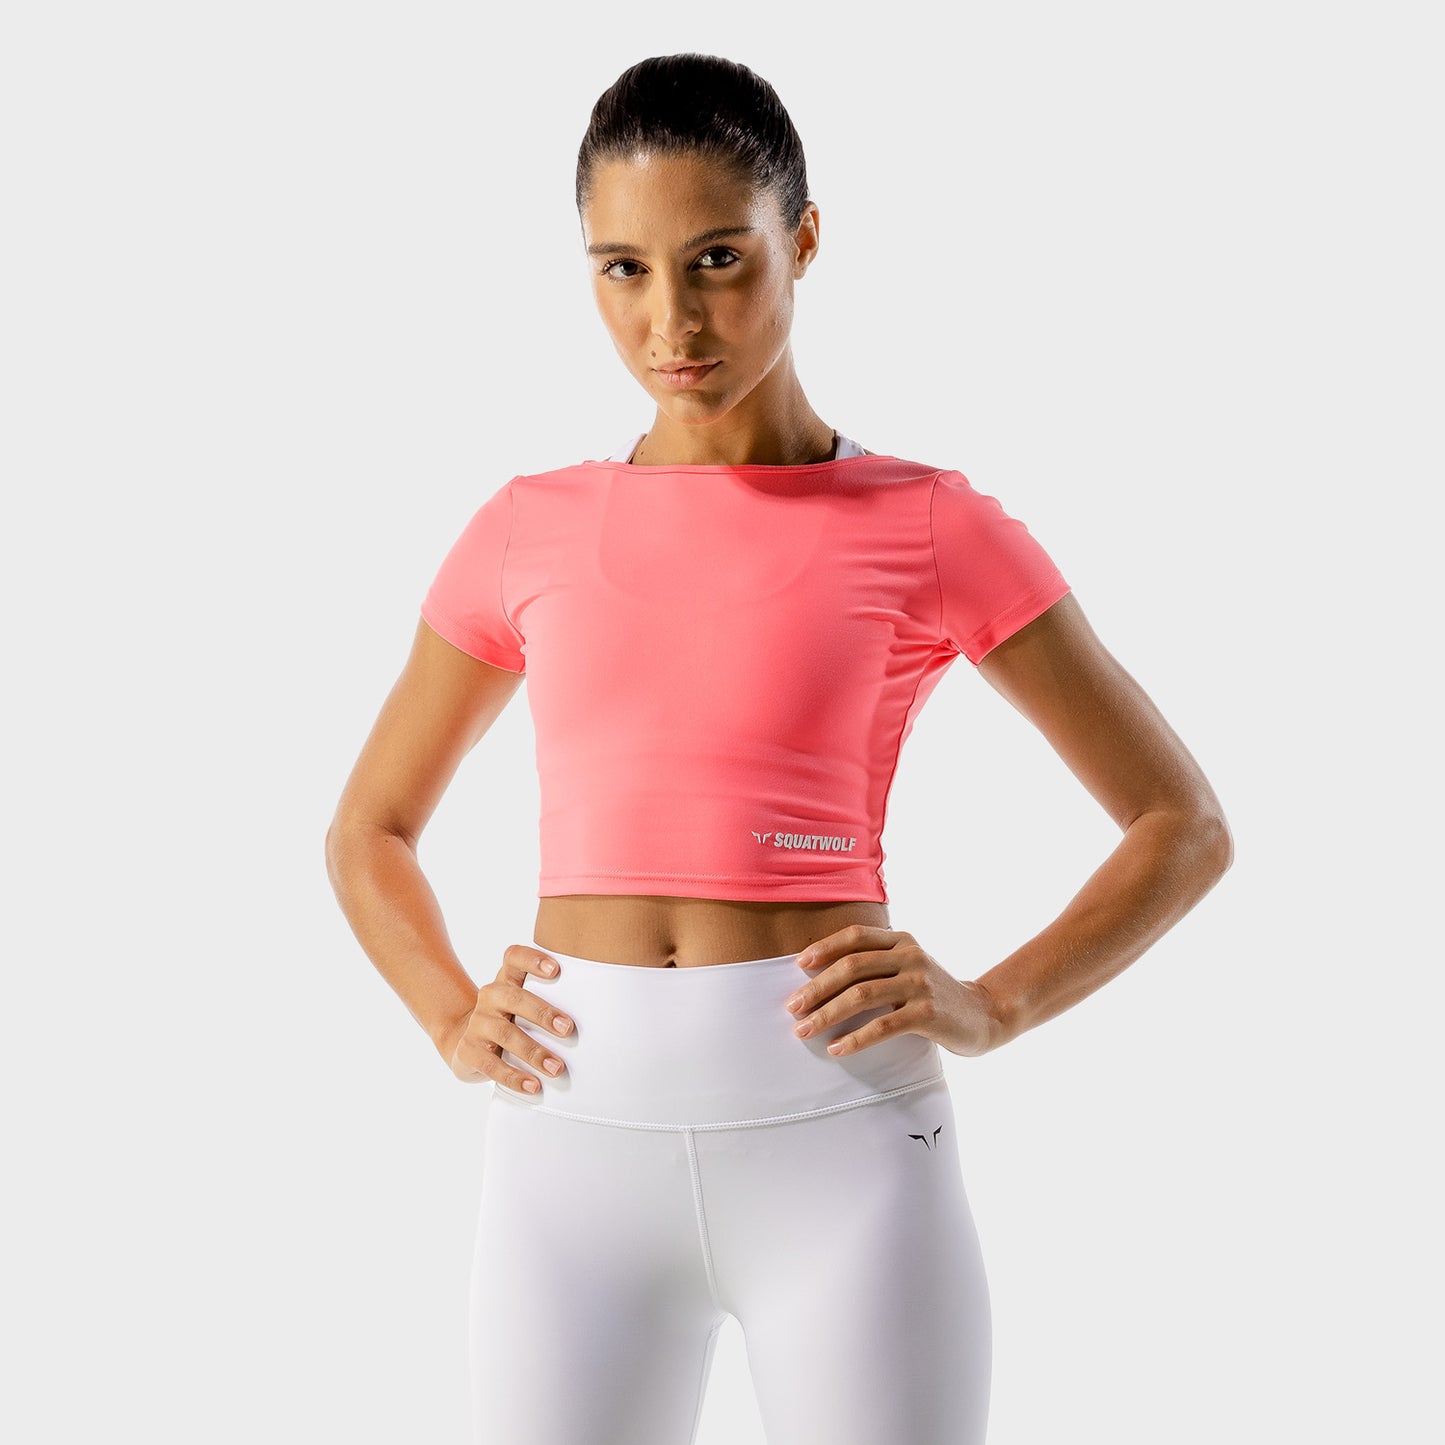 squatwolf-gym-t-shirts-for-women-warrior-crop-tee-half-sleeves-sherbert-workout-clothes